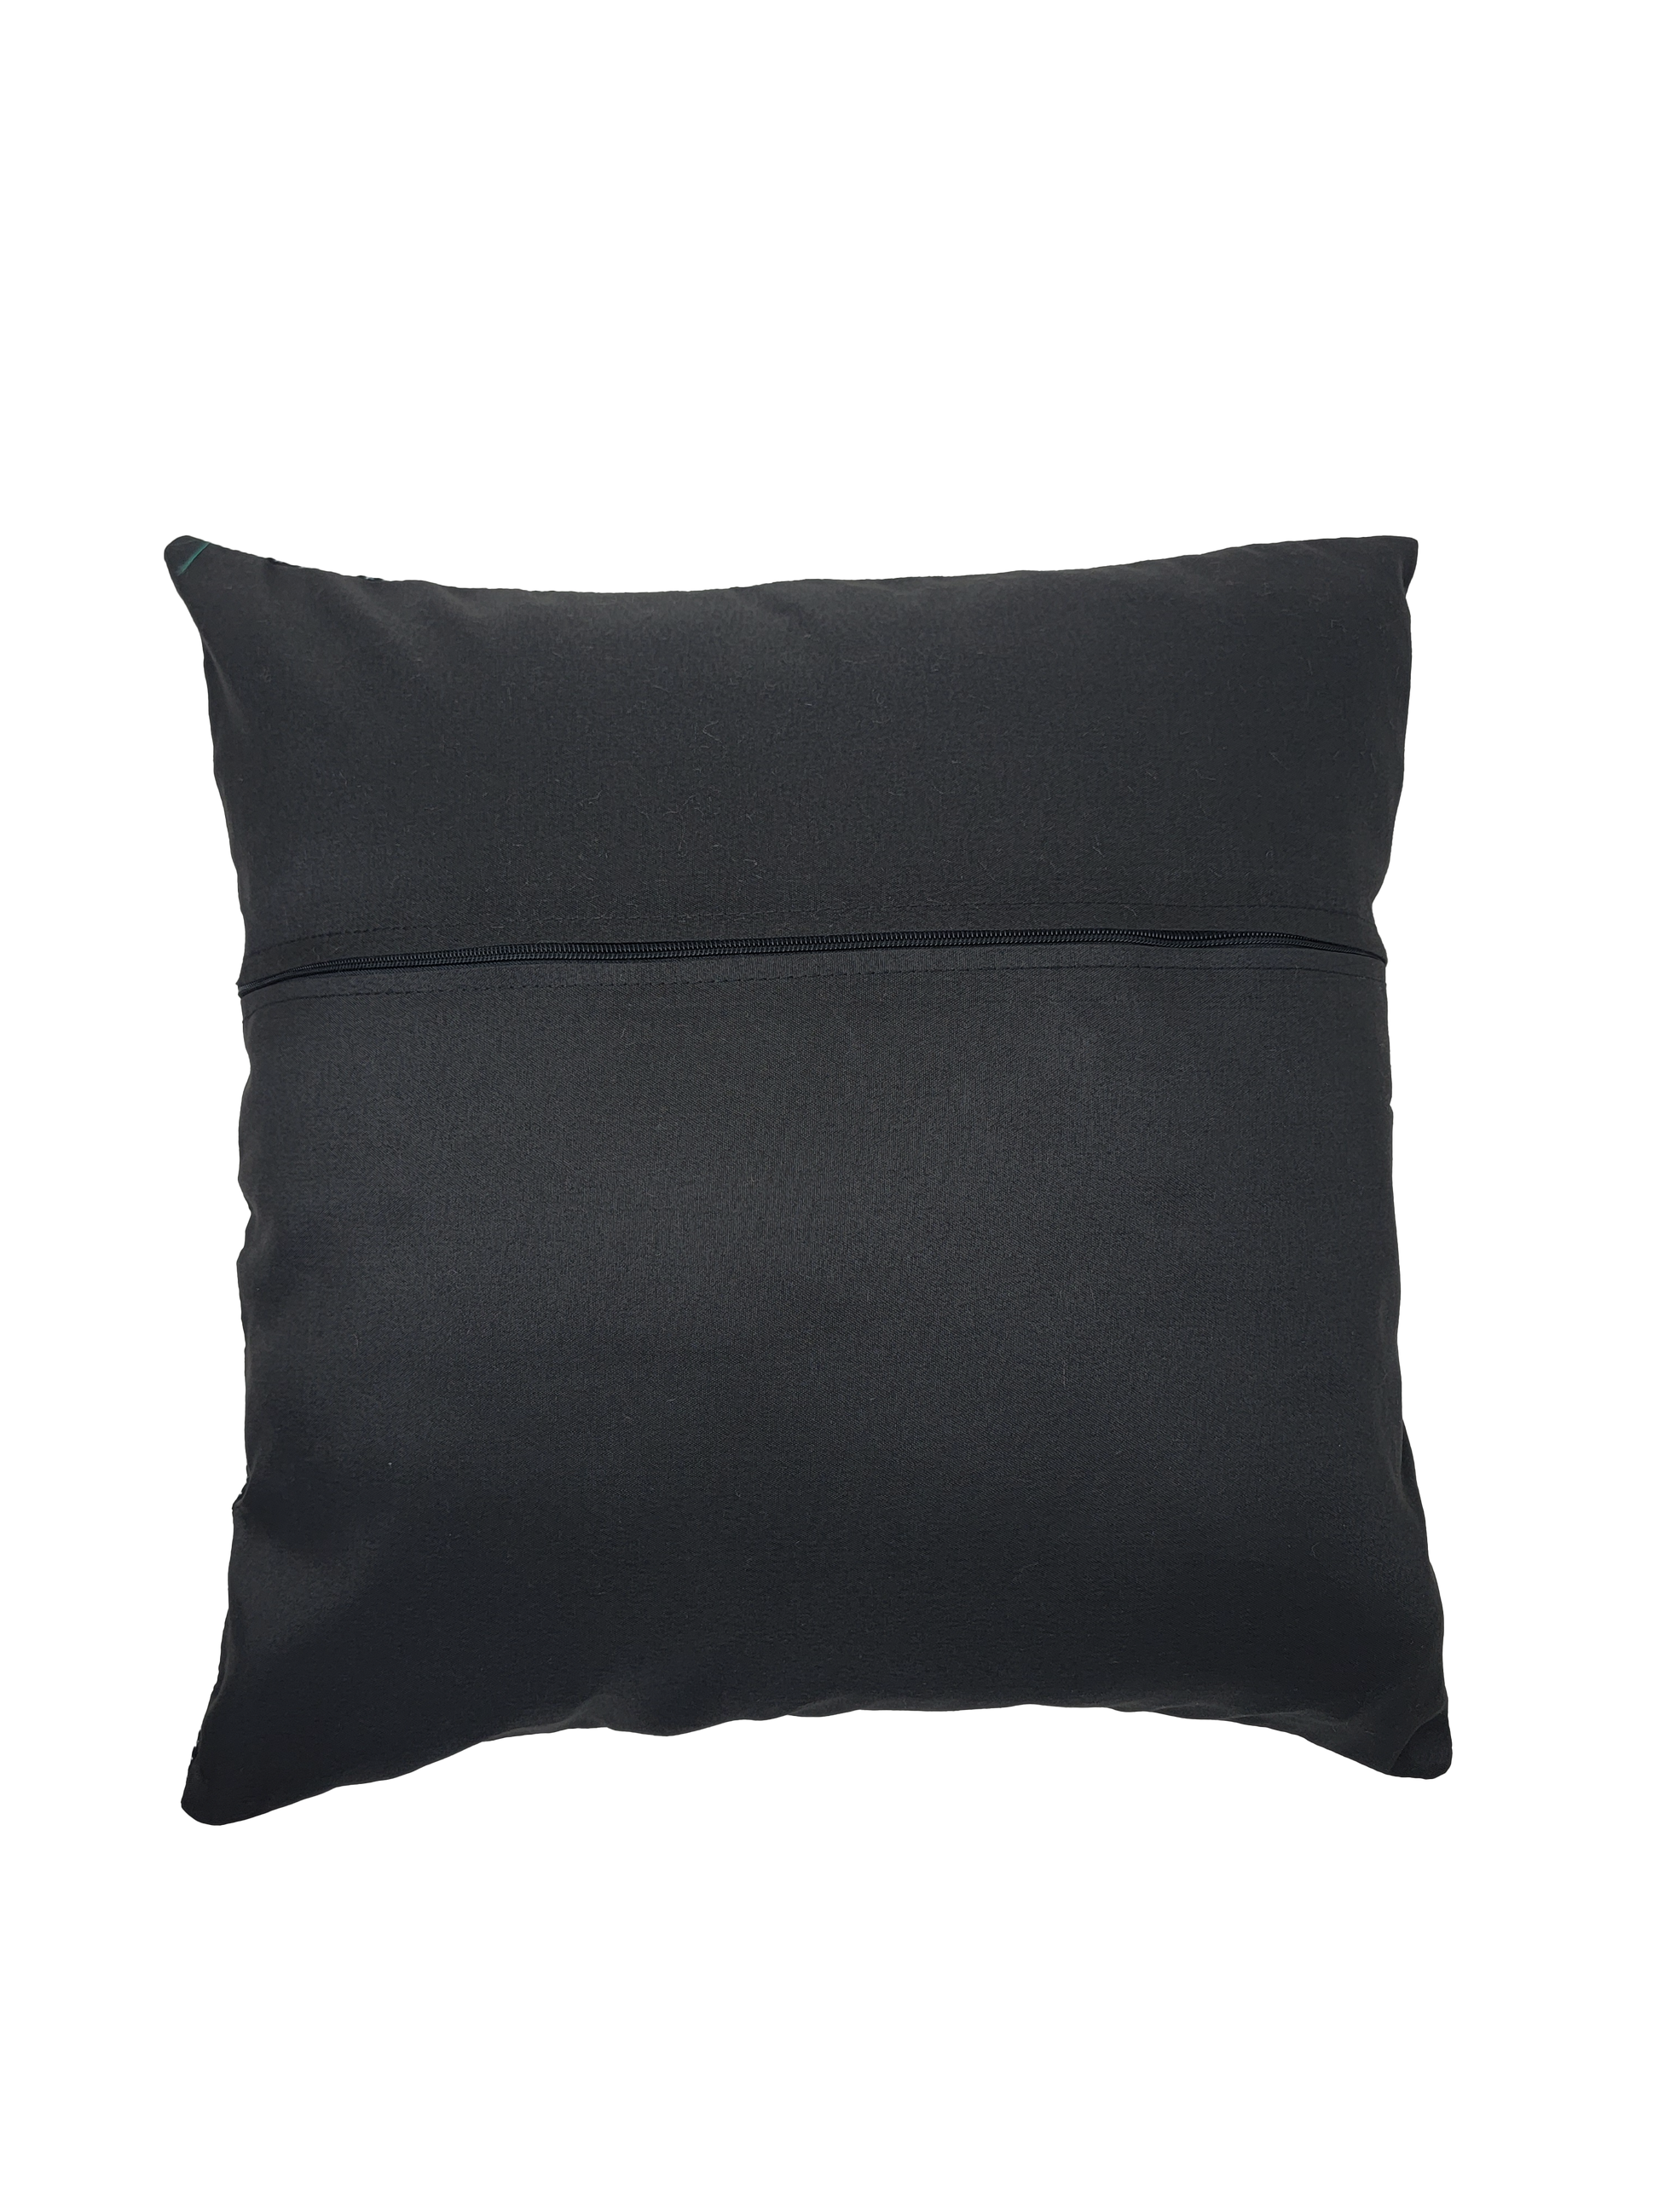 throw pillow covers back side rajaeen